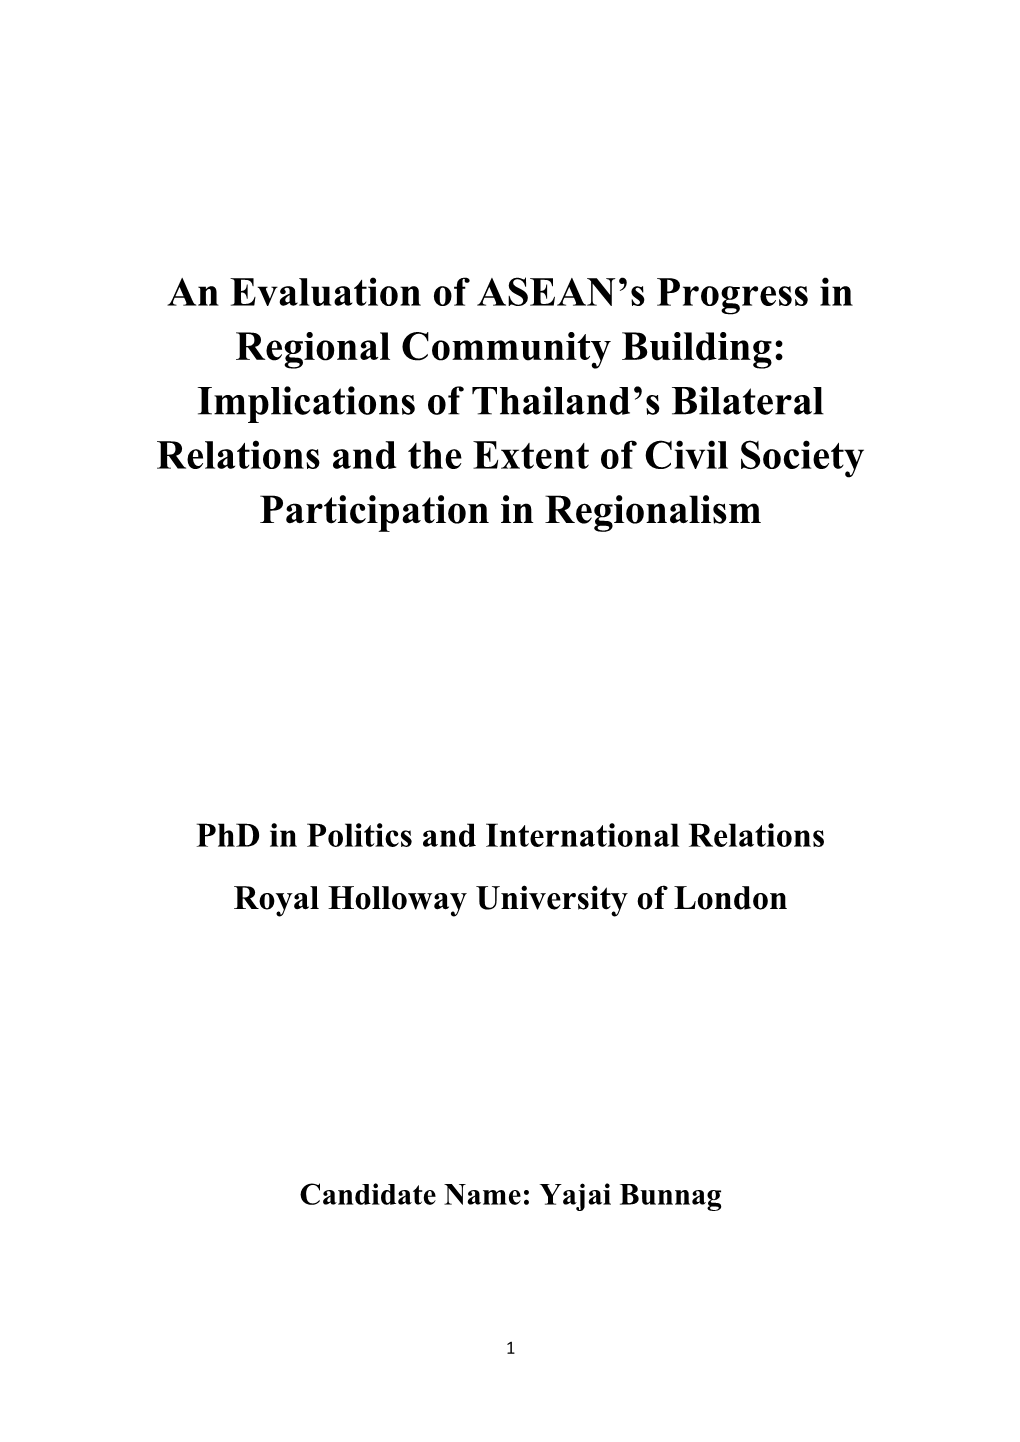 An Evaluation of ASEAN's Progress in Regional Community Building